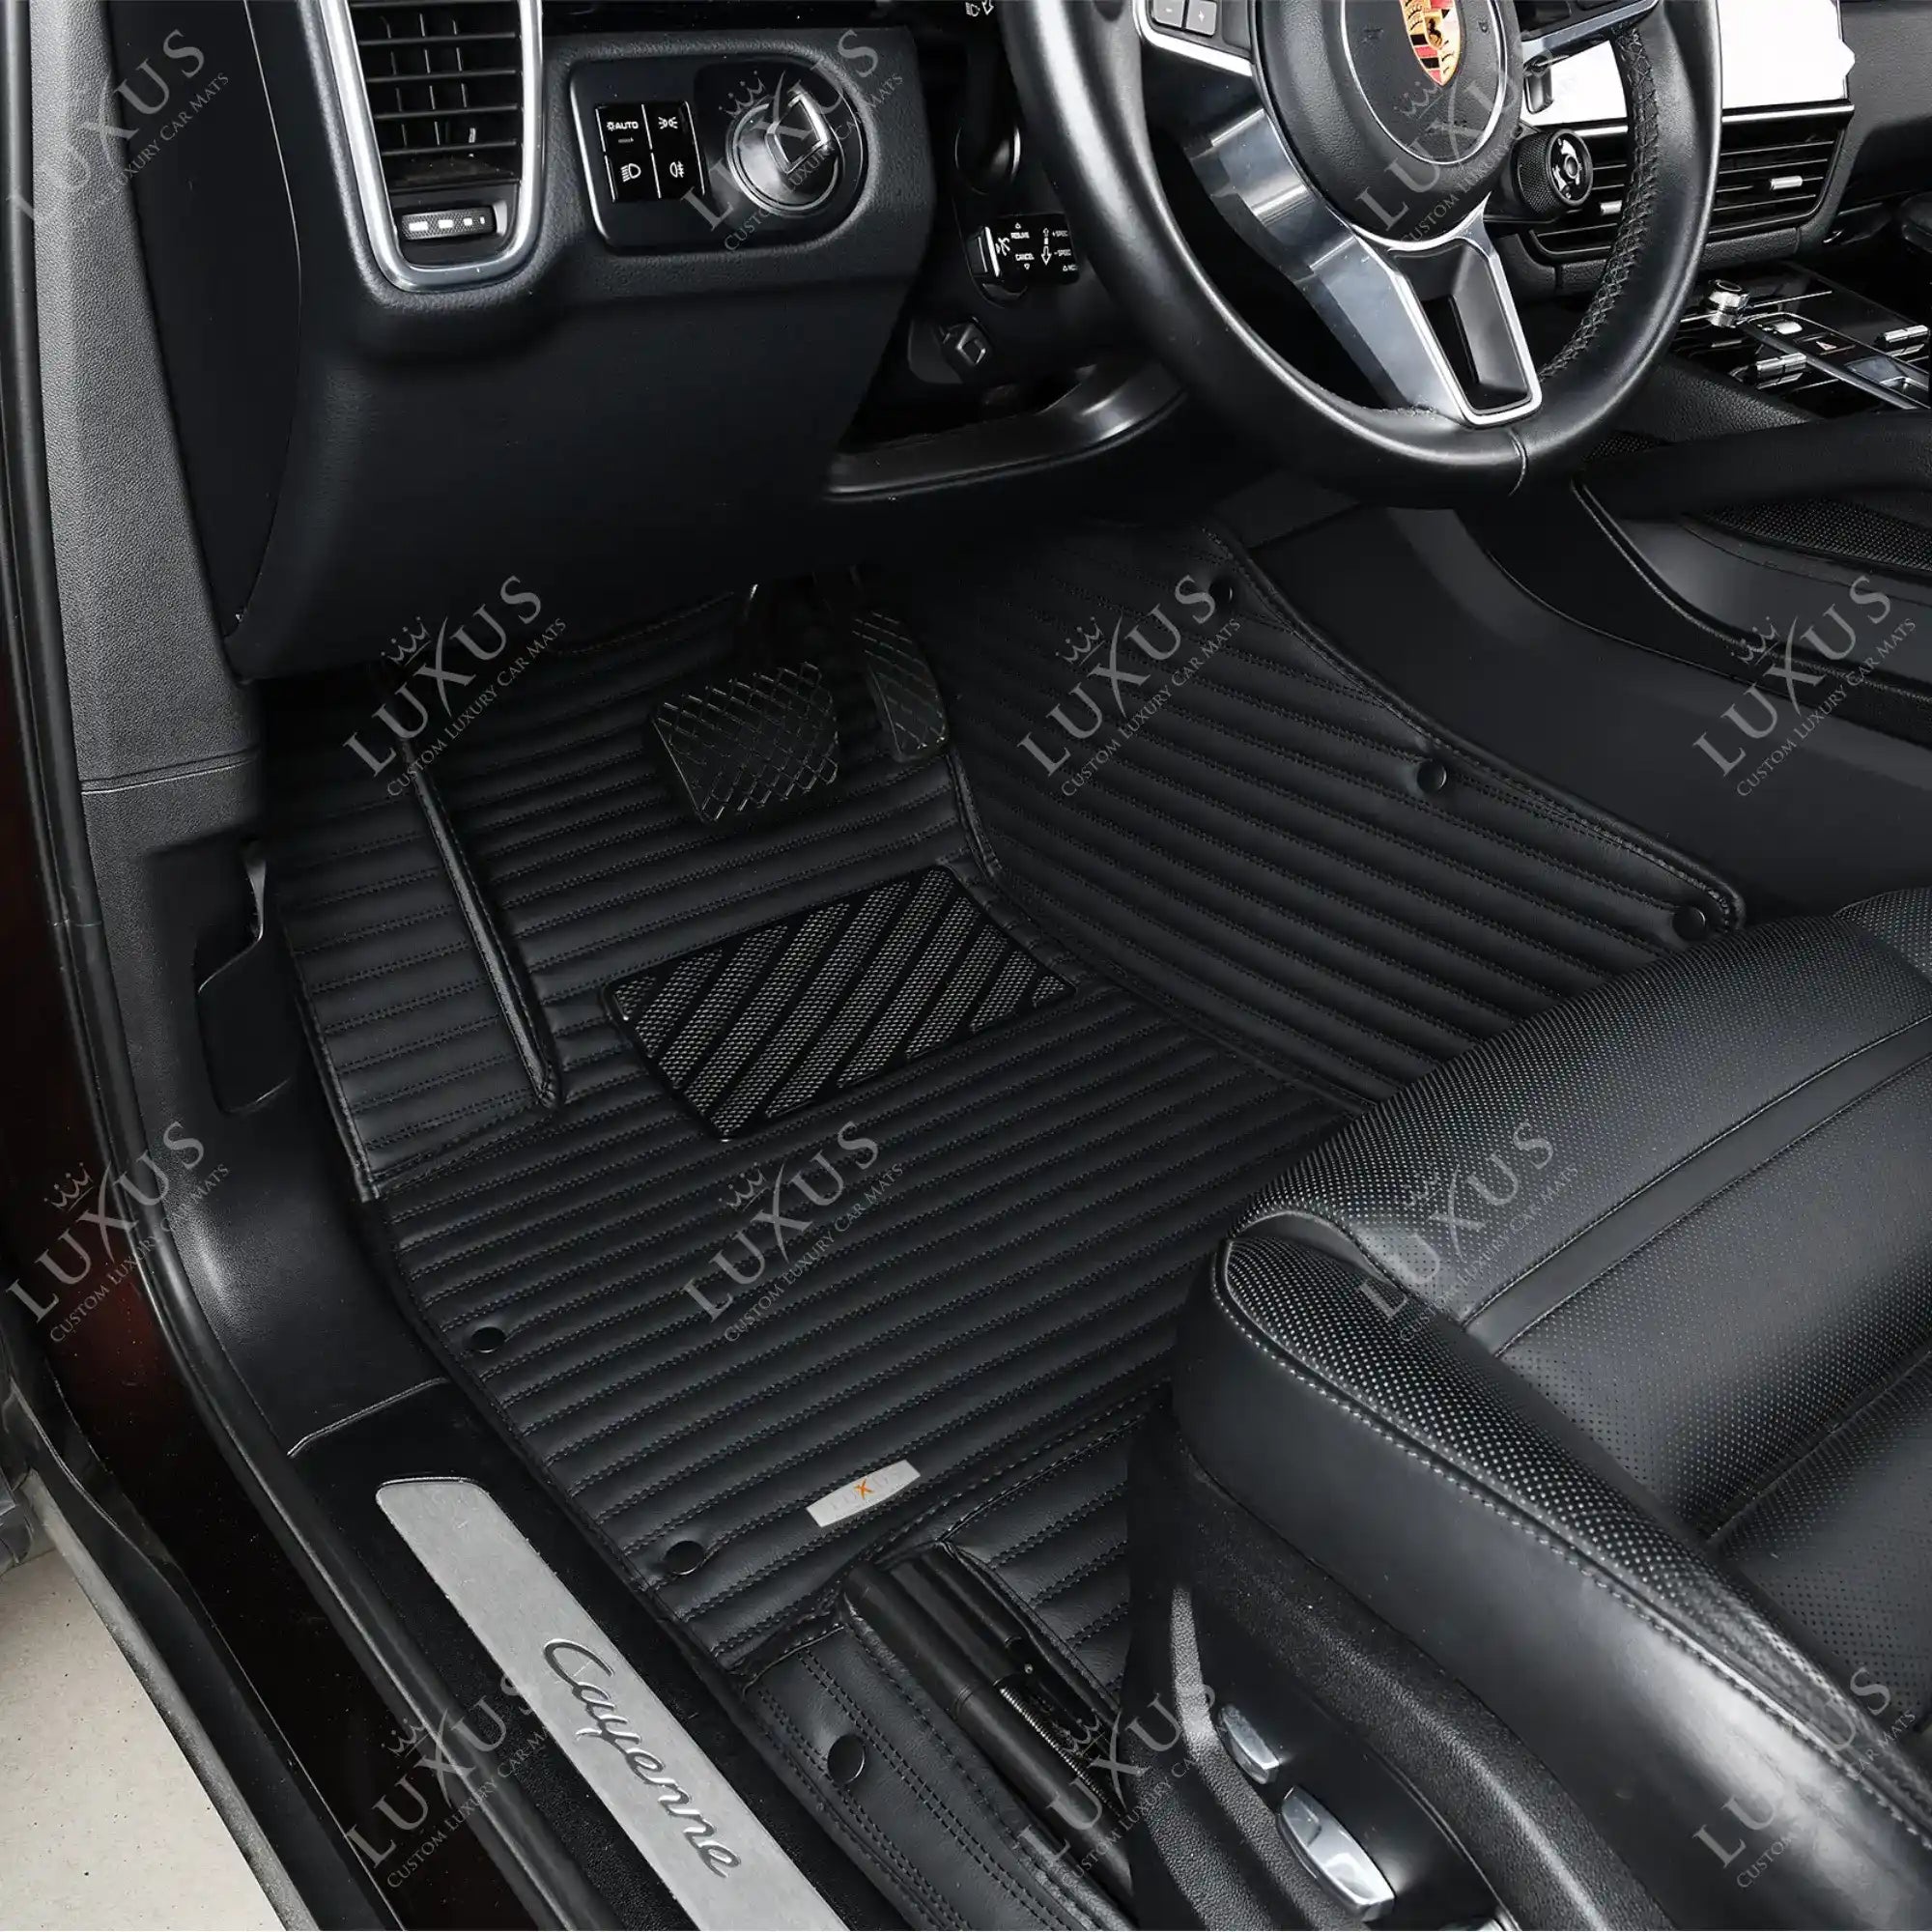 Black & Black Stitching Stripe Luxury Car Mats Set